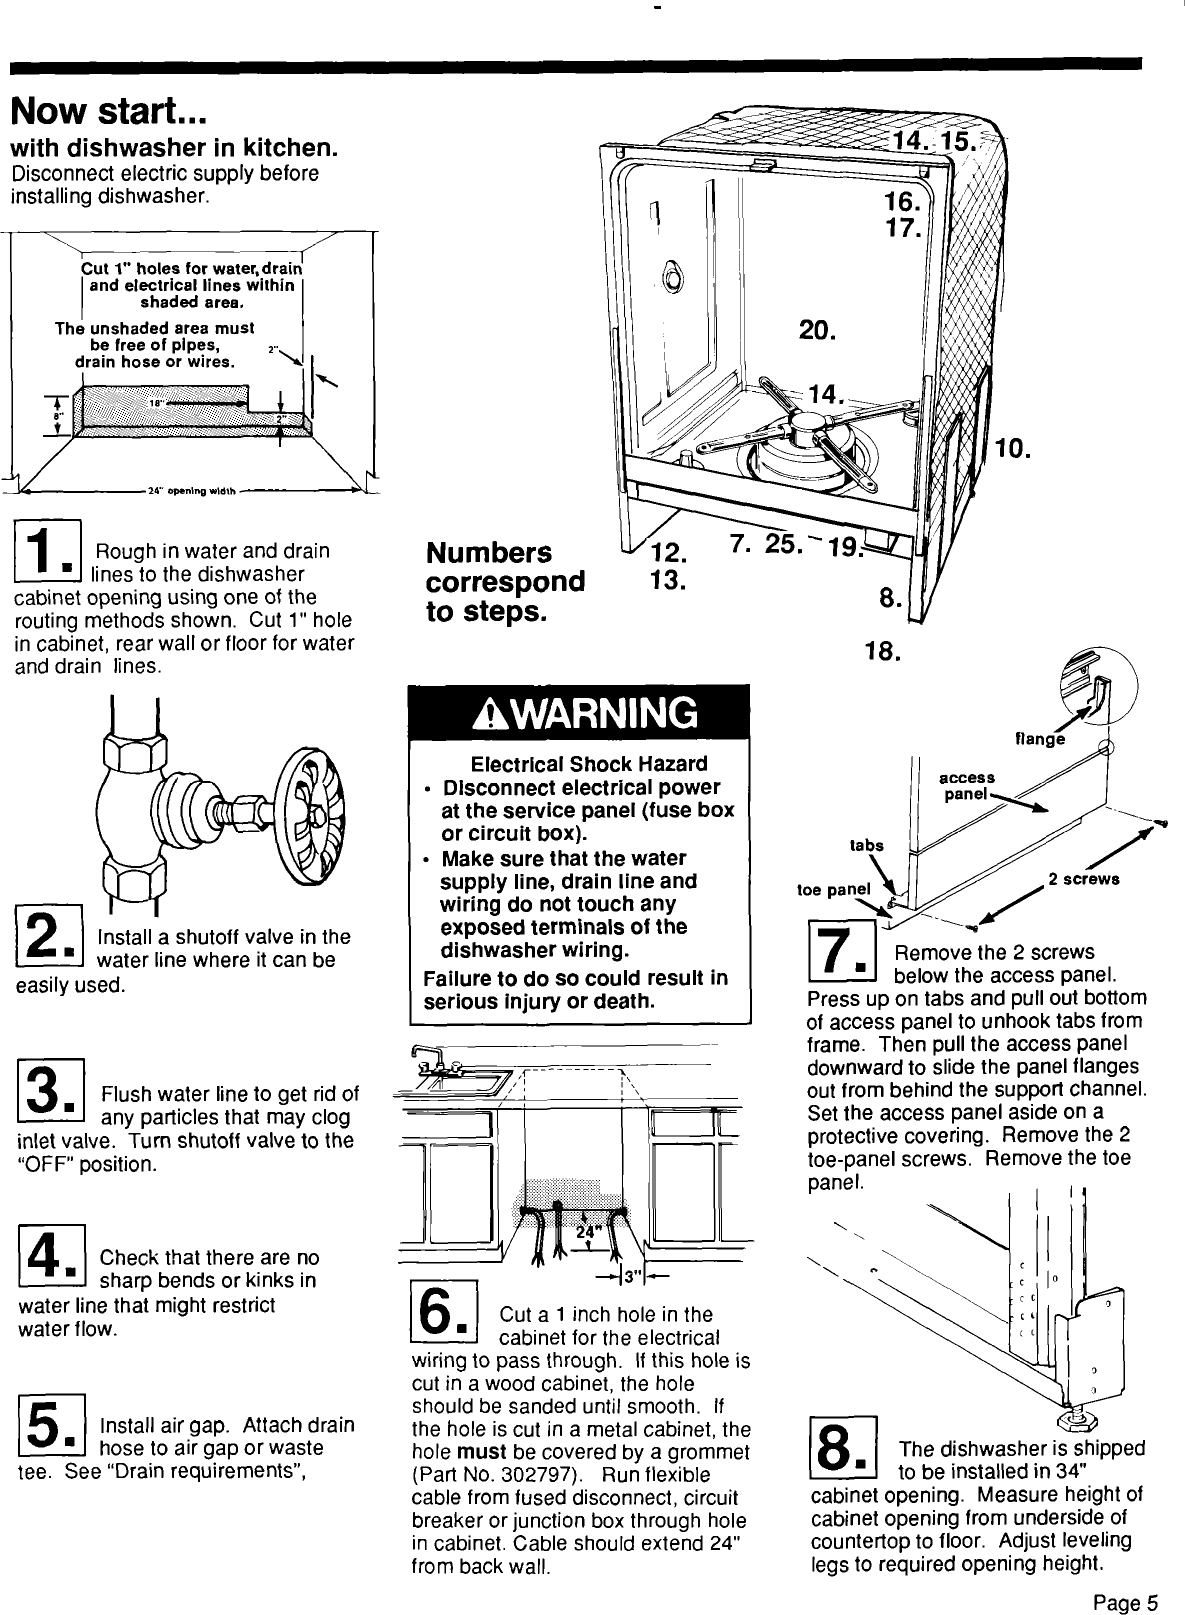 Page 5 of 8 - Kitchenaid KUDI220T5 User Manual  DISHWASHER - Manuals And Guides L0907467